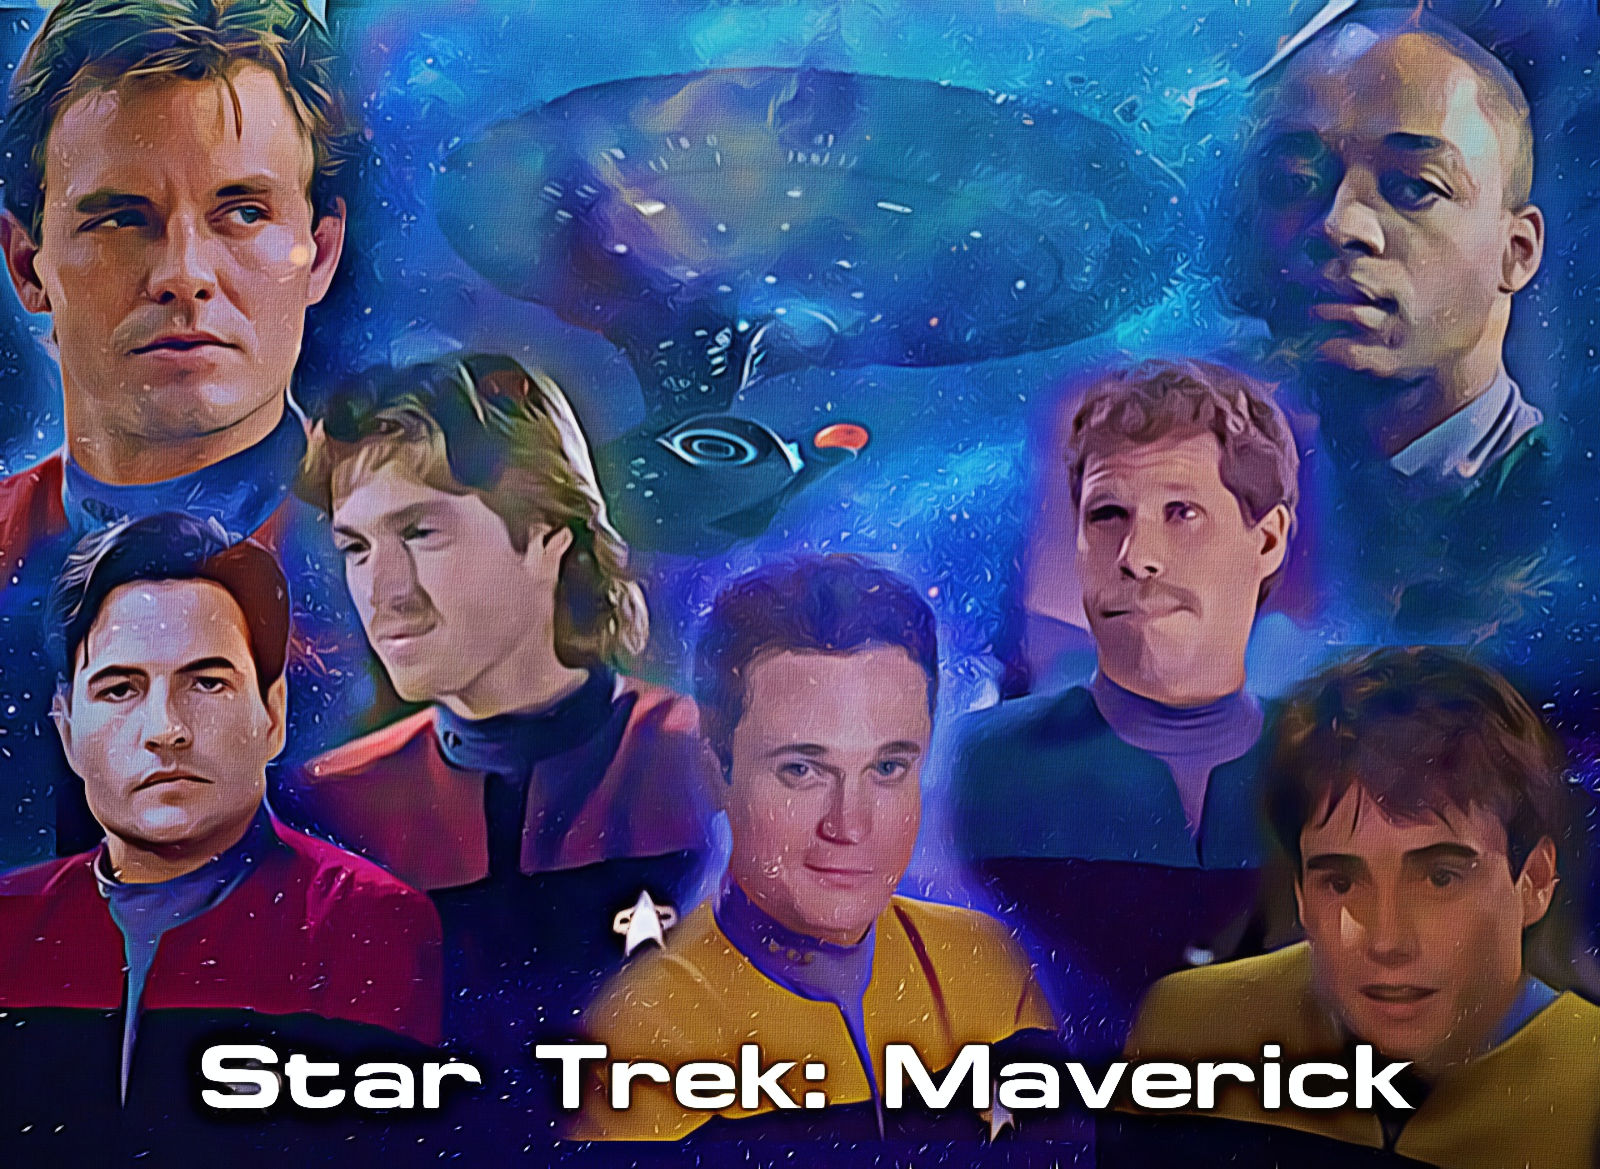 Star Trek: Maverick